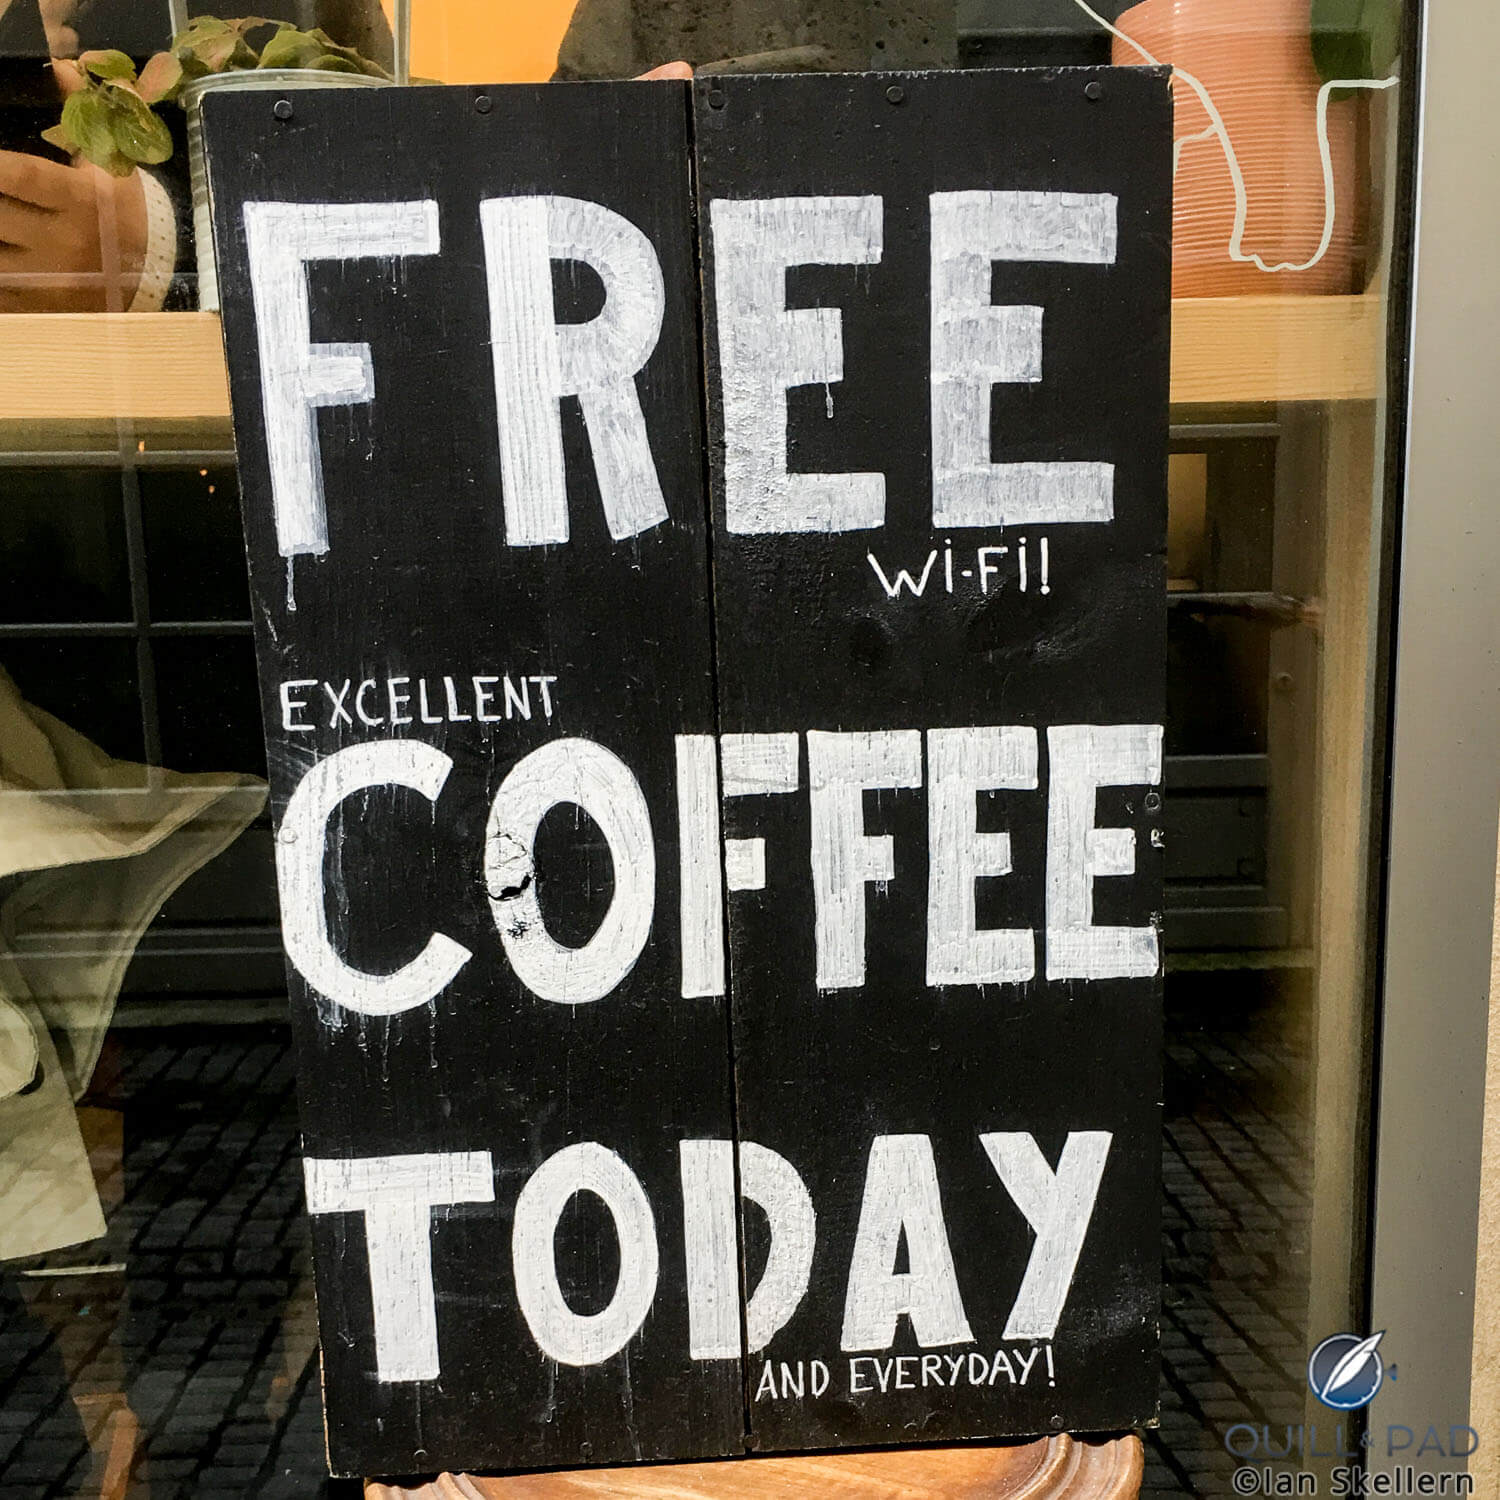 Free coffee? Check again